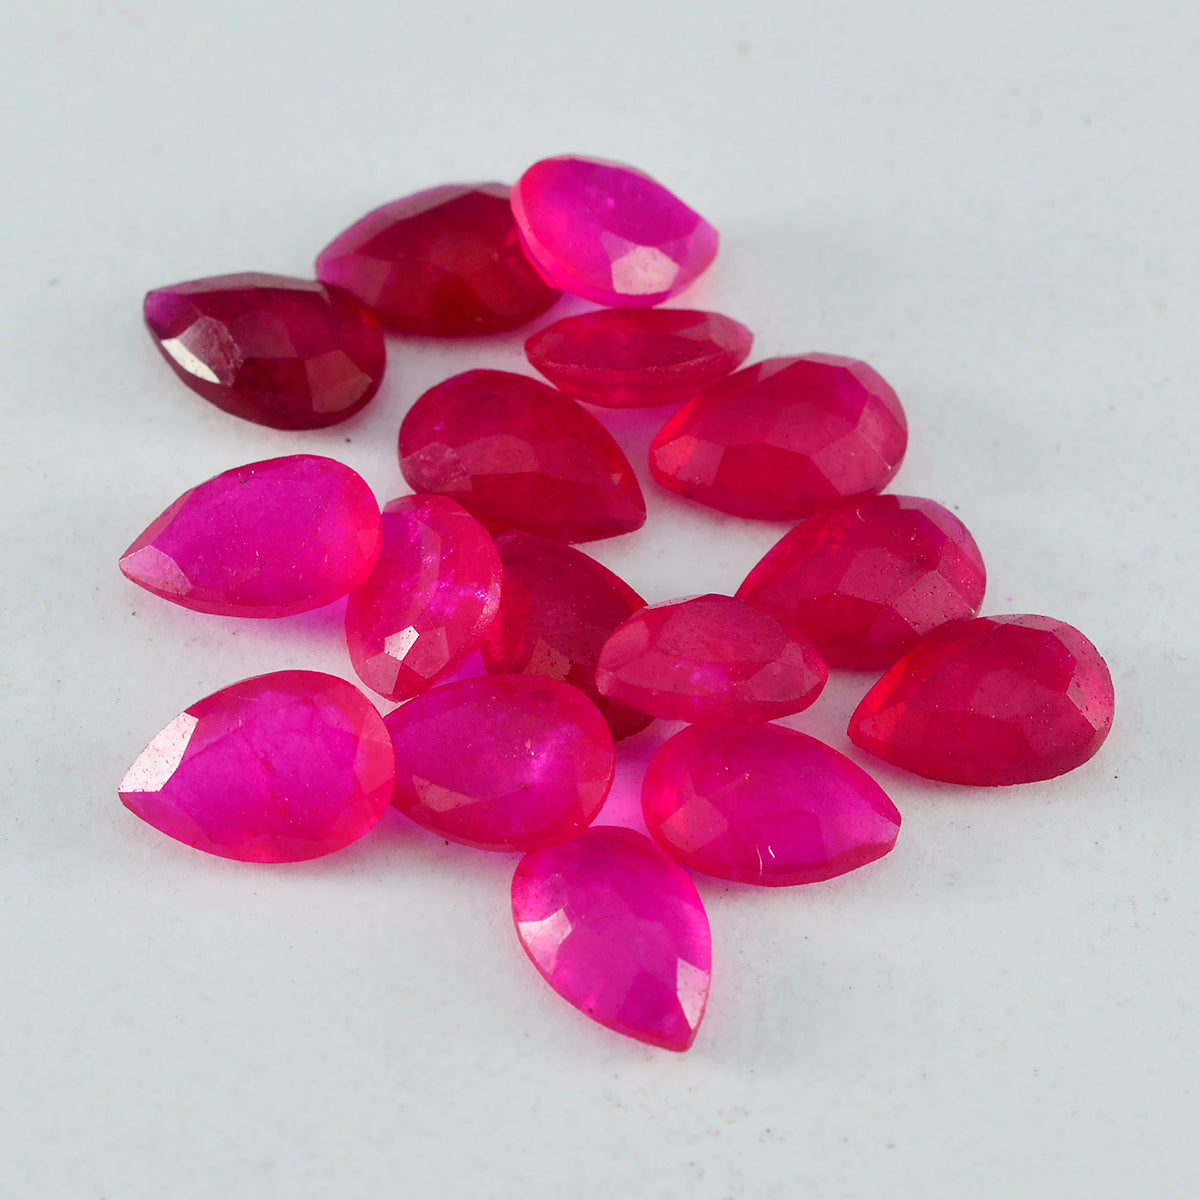 Riyogems 1PC Real Red Jasper Faceted 7x10 mm Pear Shape handsome Quality Gemstone